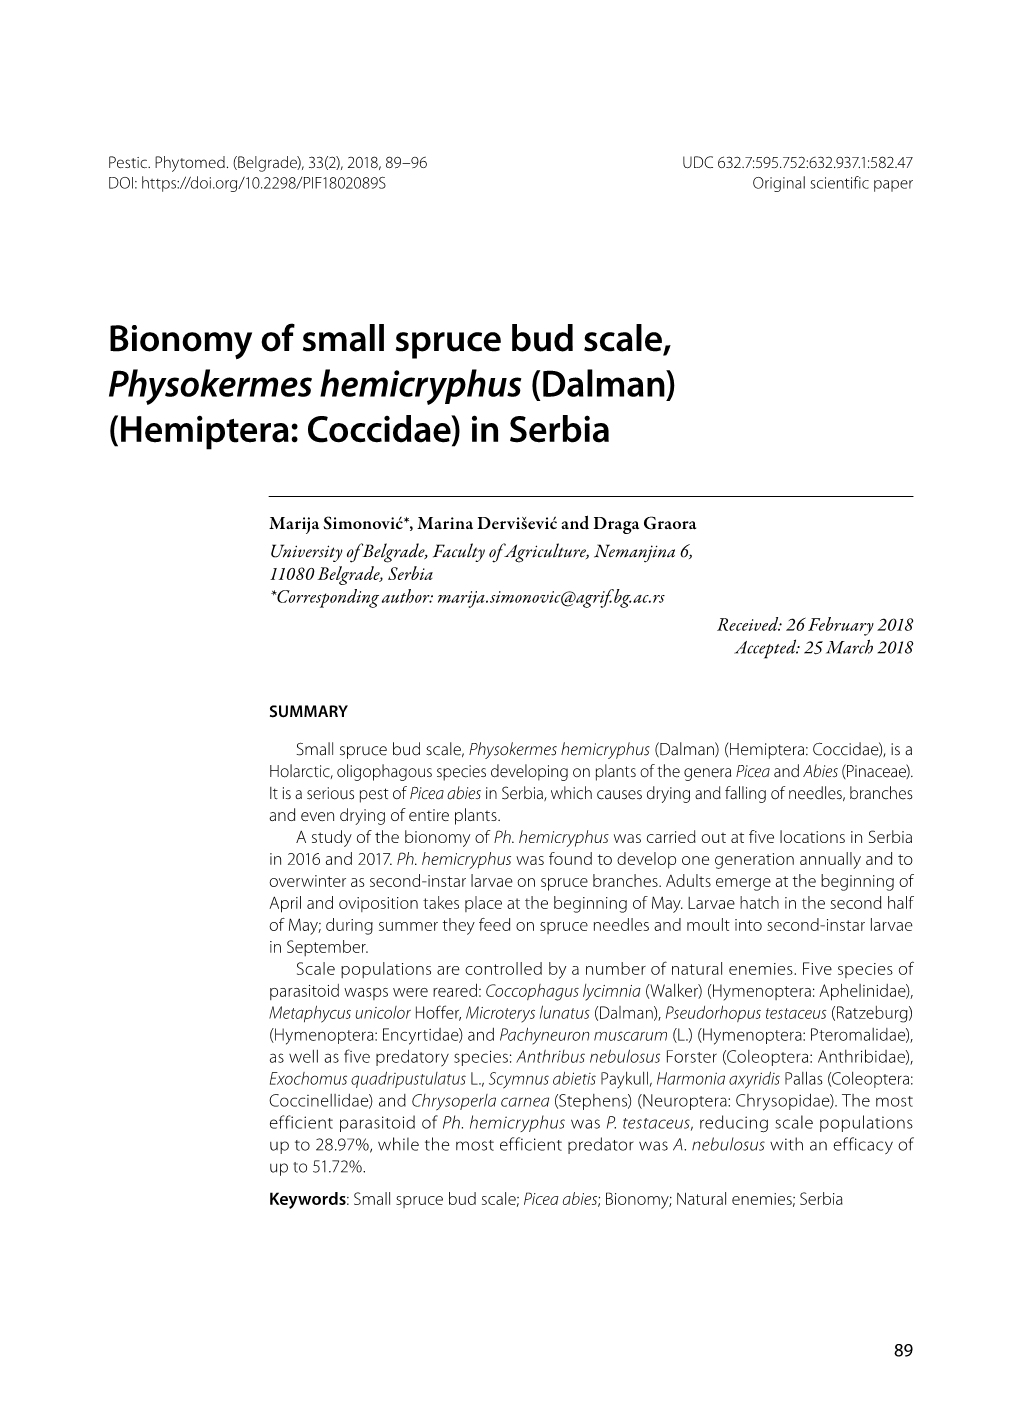 Bionomy of Small Spruce Bud Scale, Physokermes Hemicryphus (Dalman) (Hemiptera: Coccidae) in Serbia